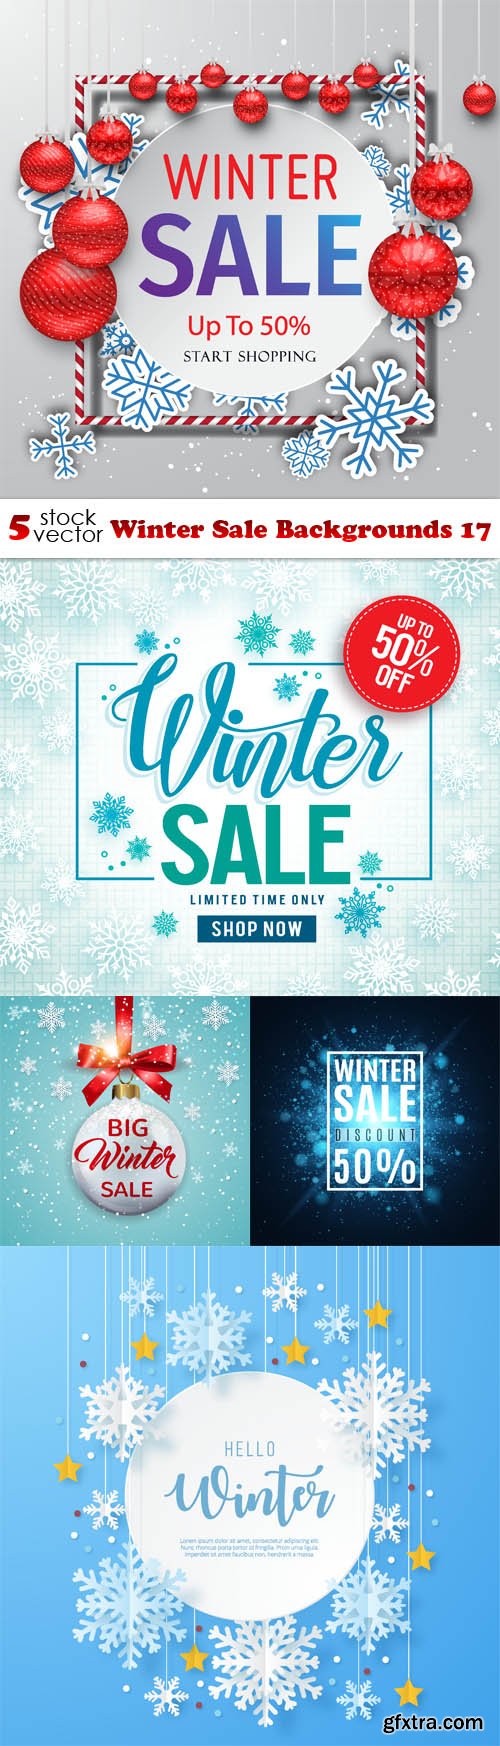 Vectors - Winter Sale Backgrounds 17